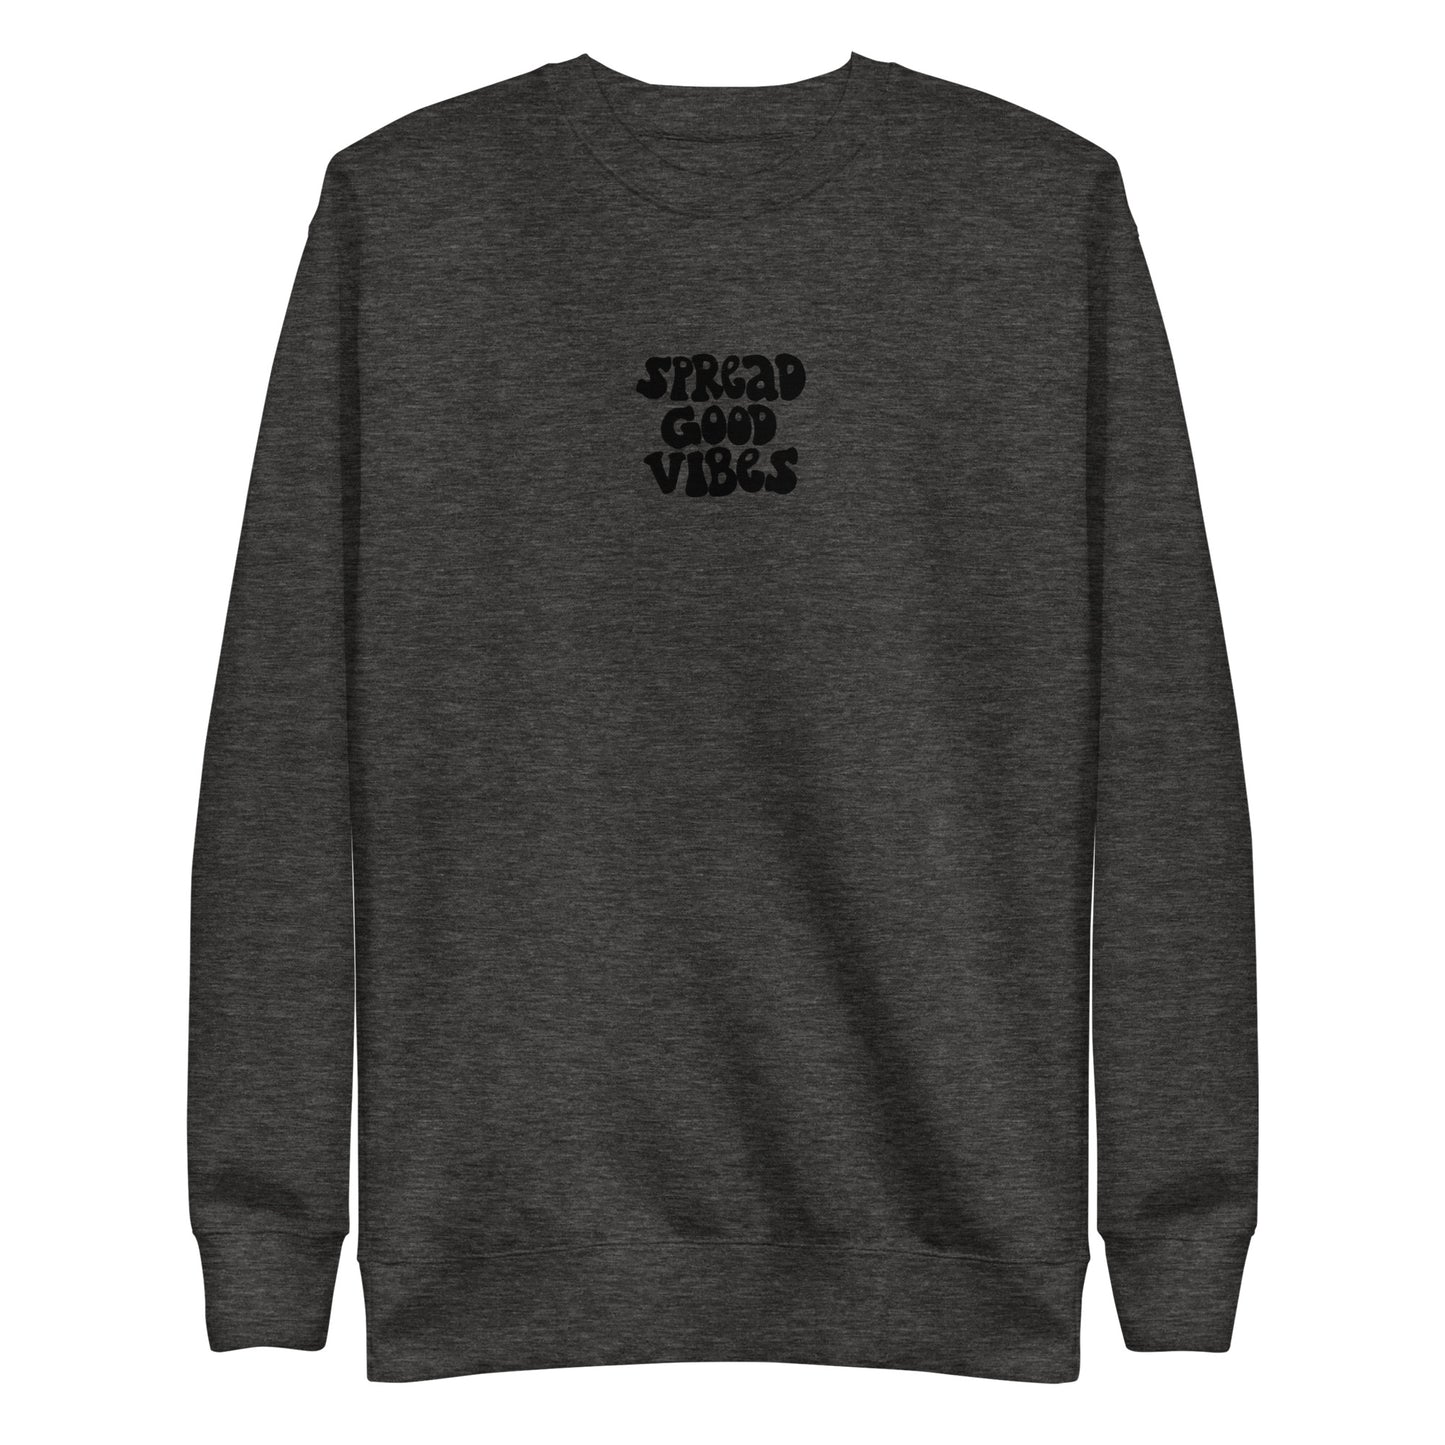 spread good vibes crewneck sweatshirt